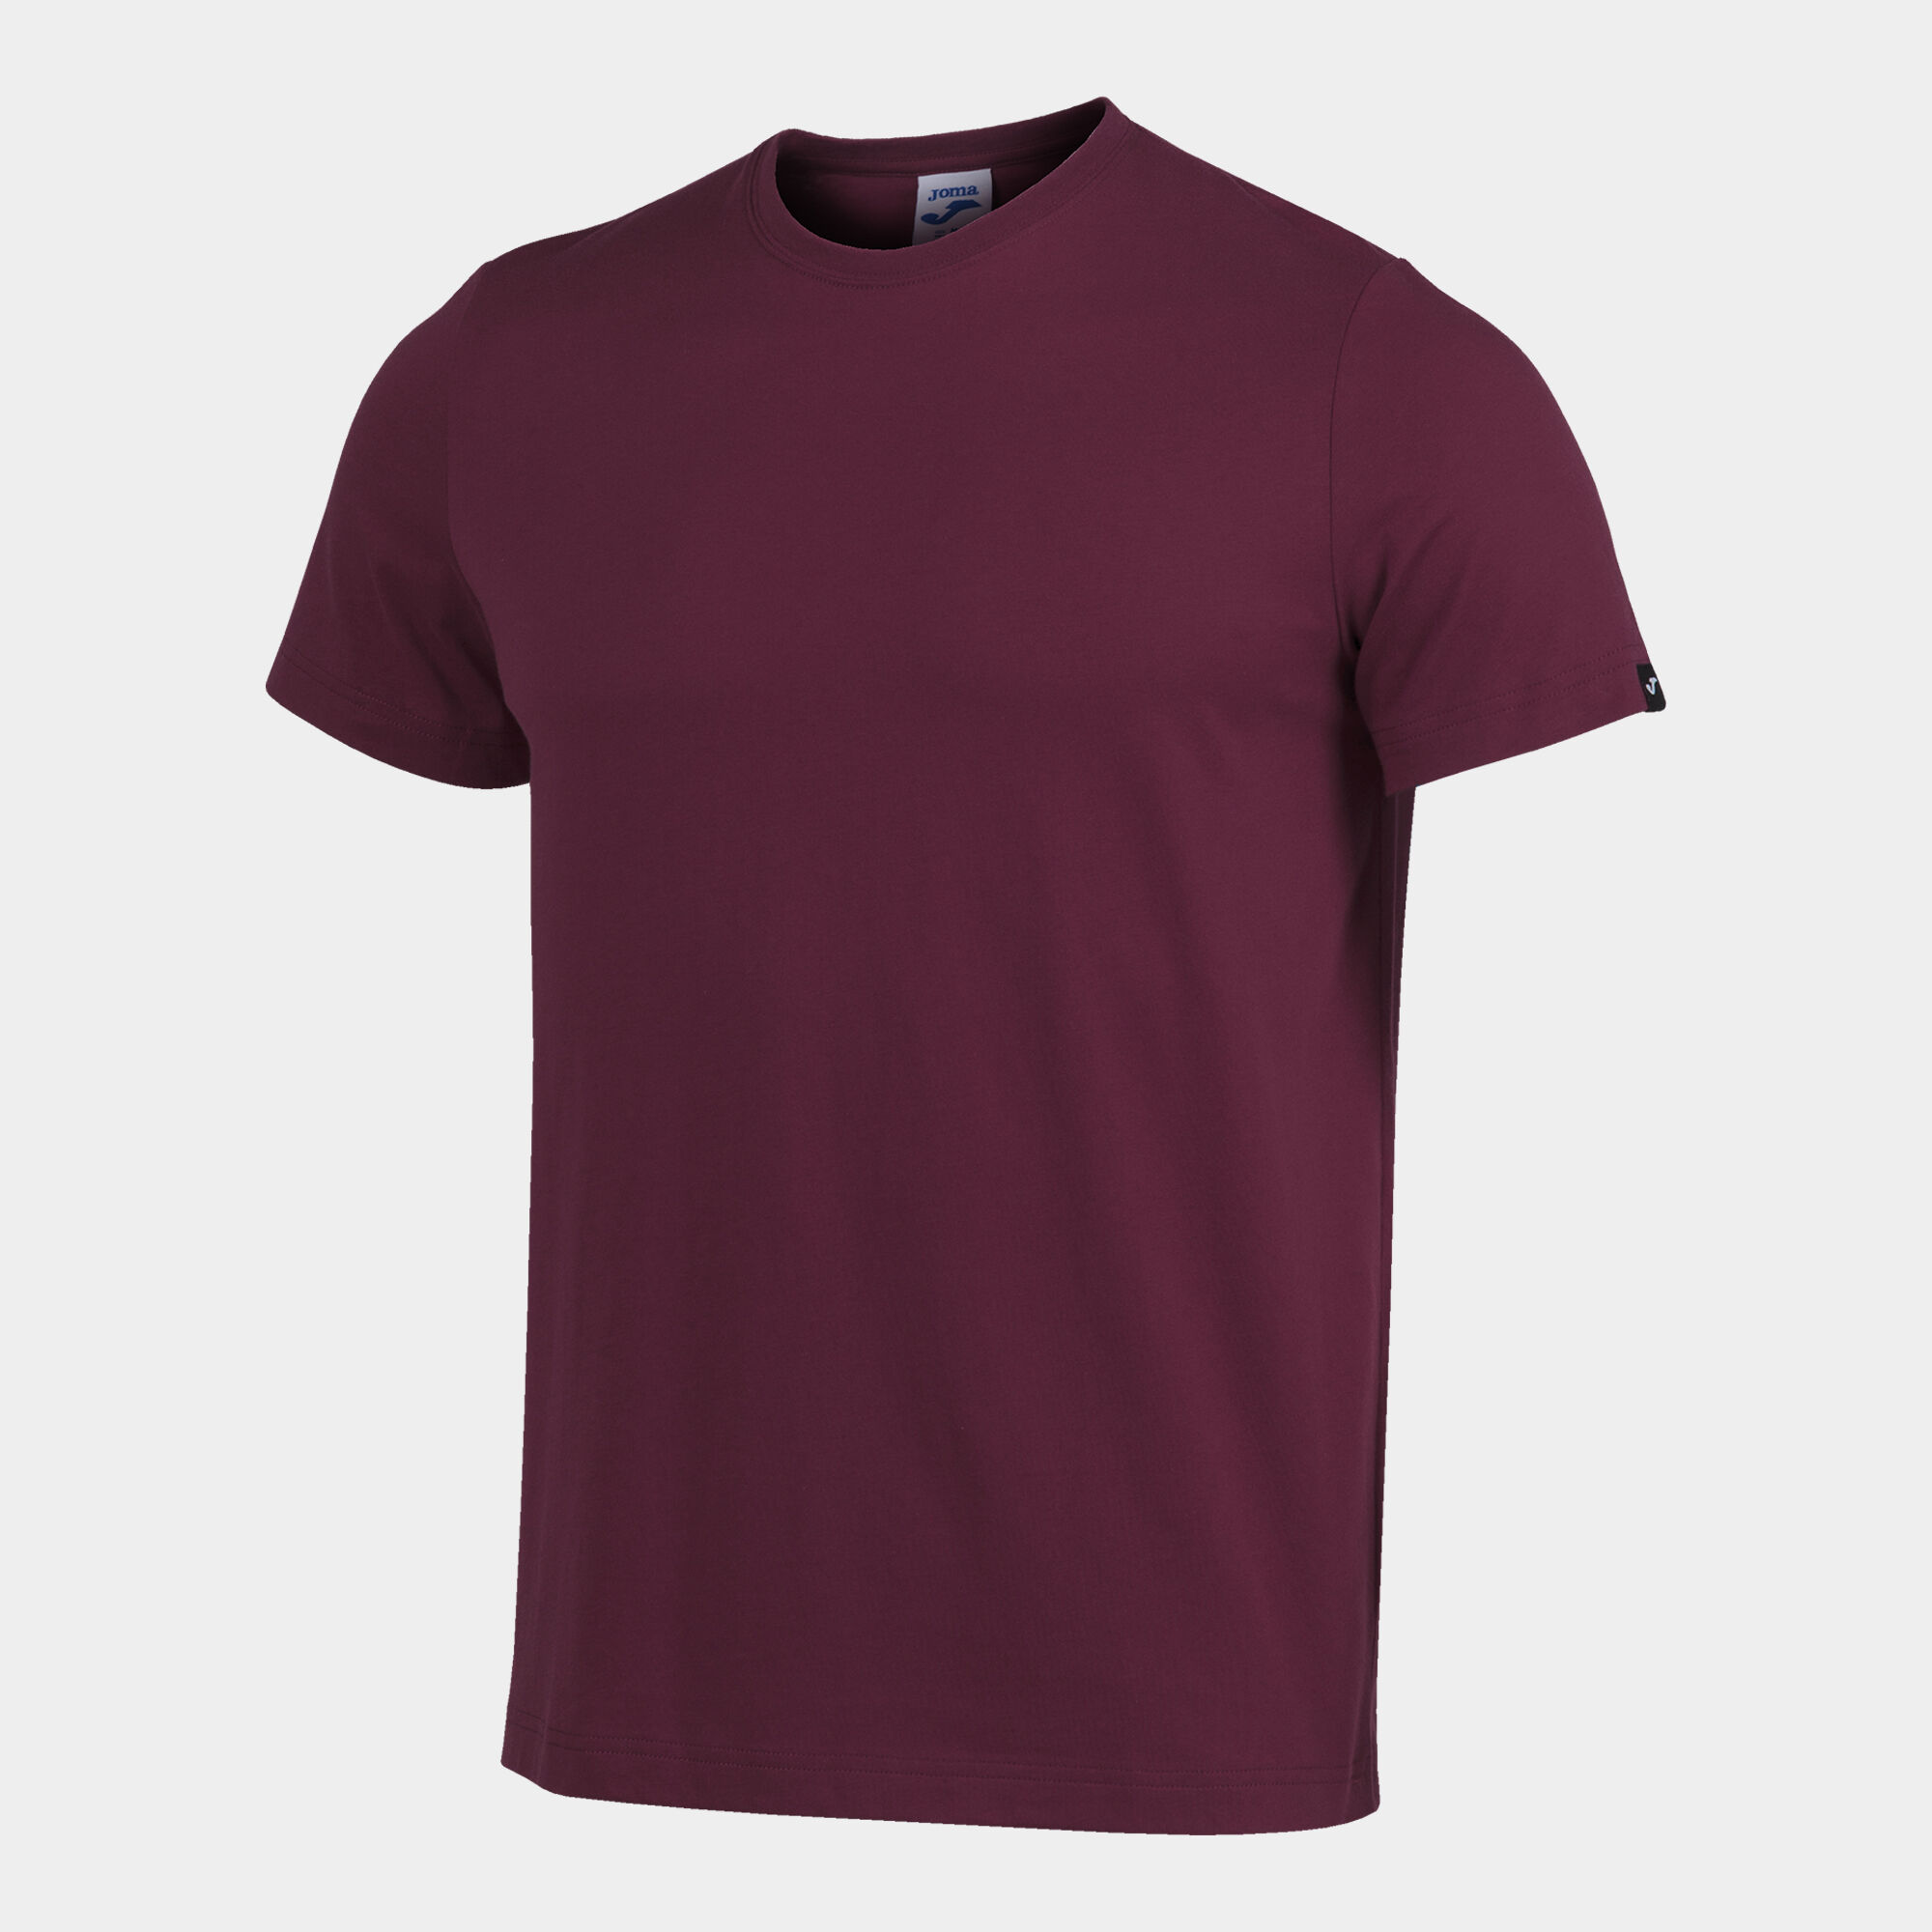 Shirt short sleeve man Desert burgundy